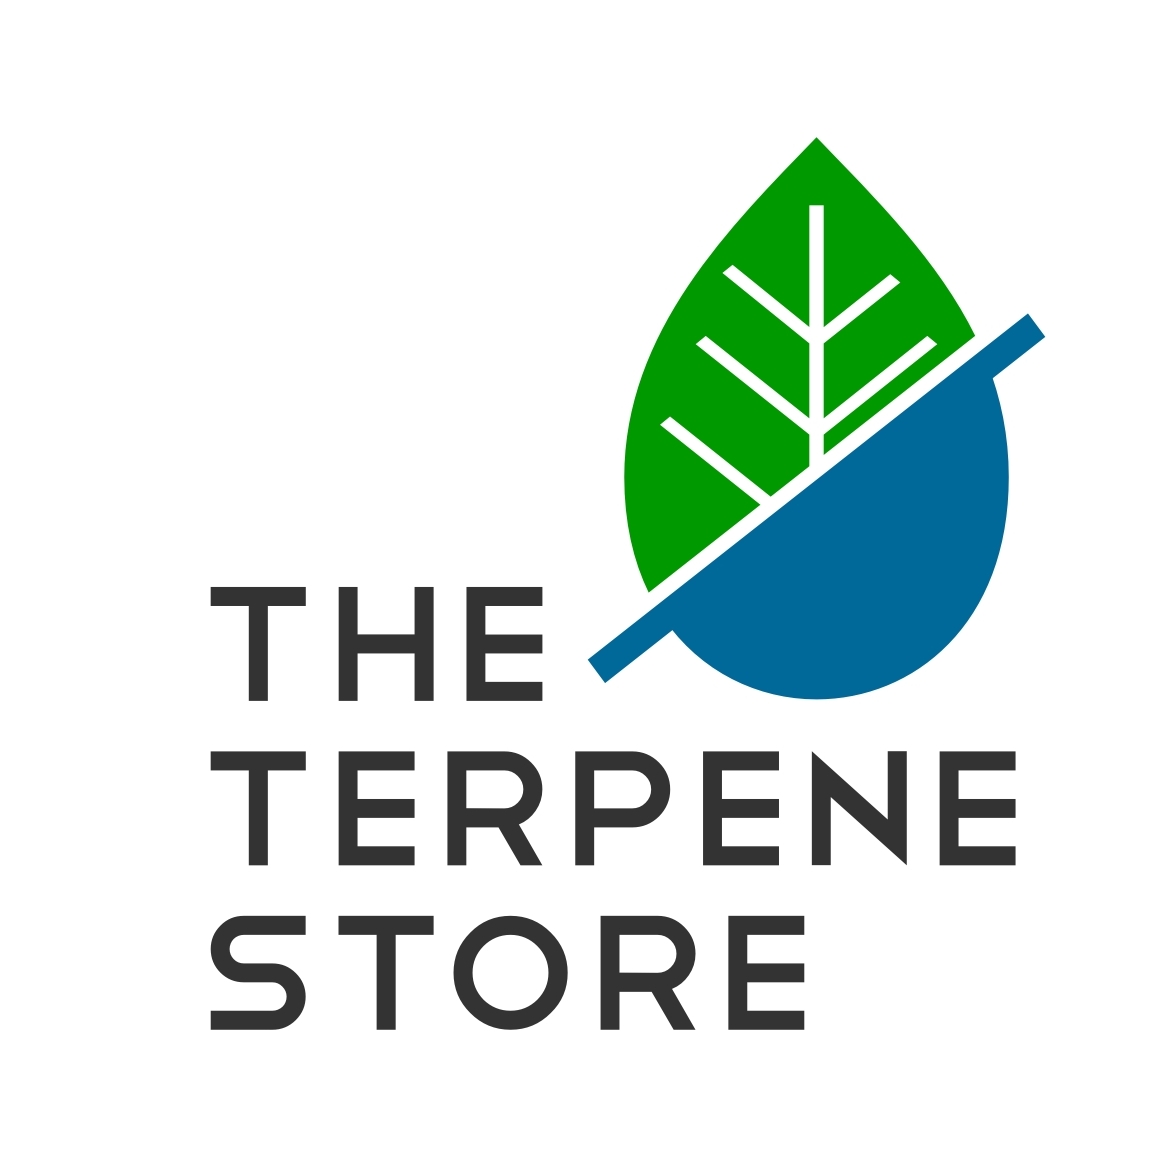 The Terpene Store